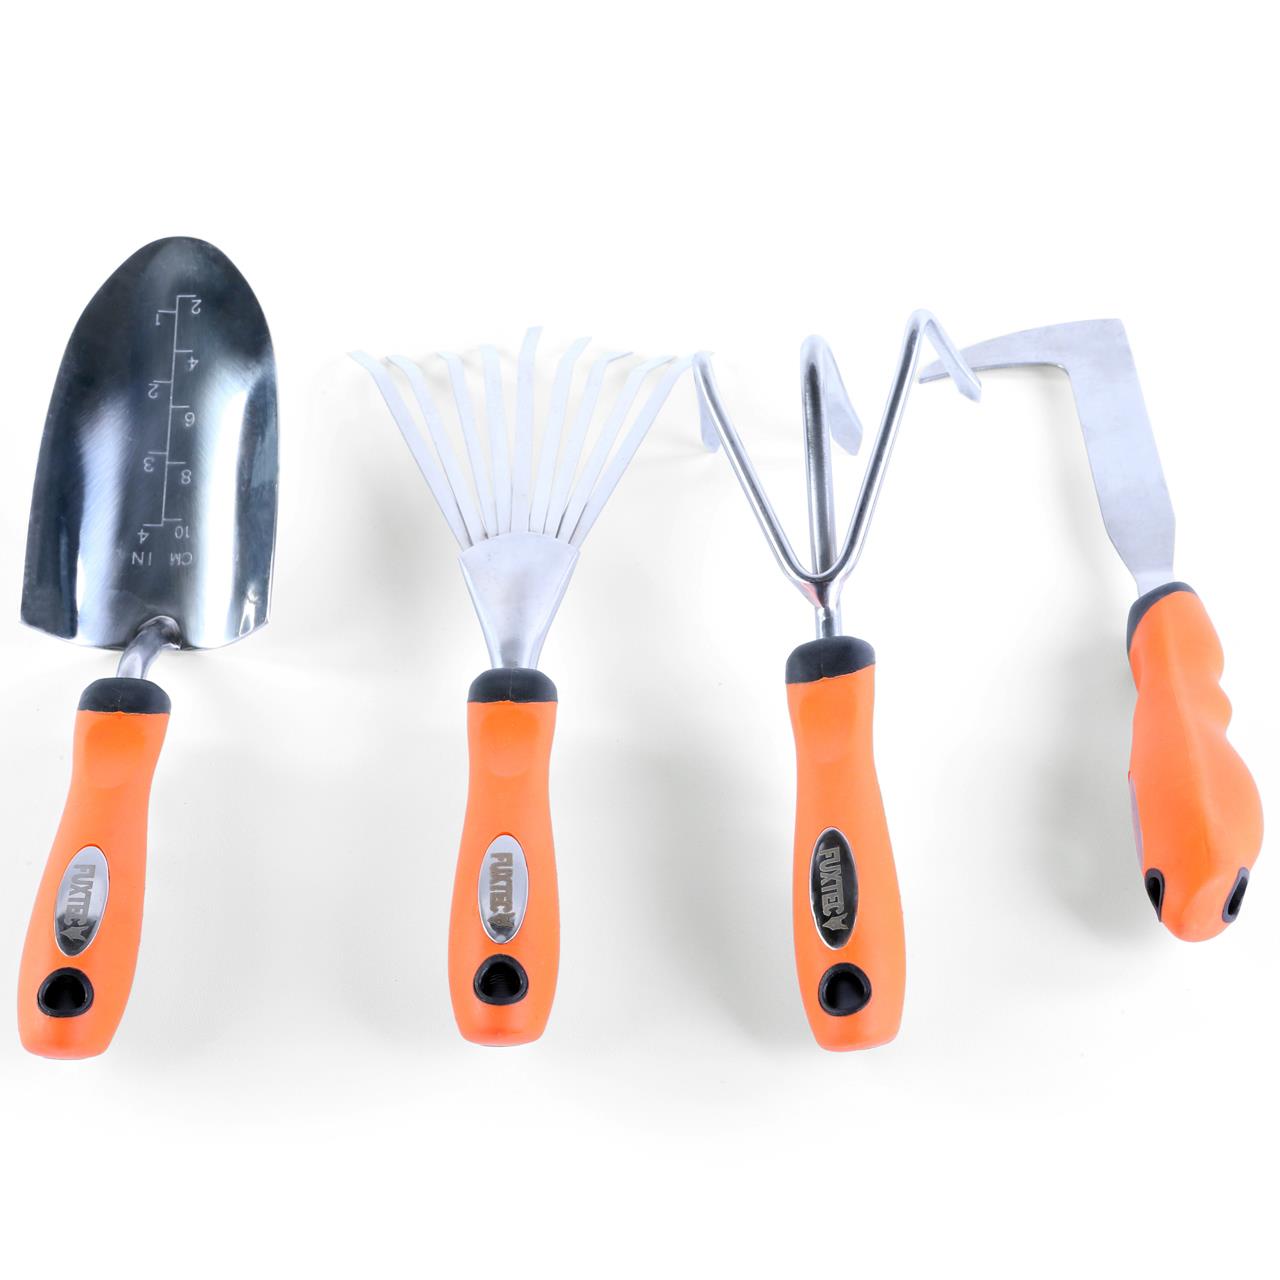 FUXTEC premium gardening tools - SET of 4 - FX-HGW4 - 
stainless steel